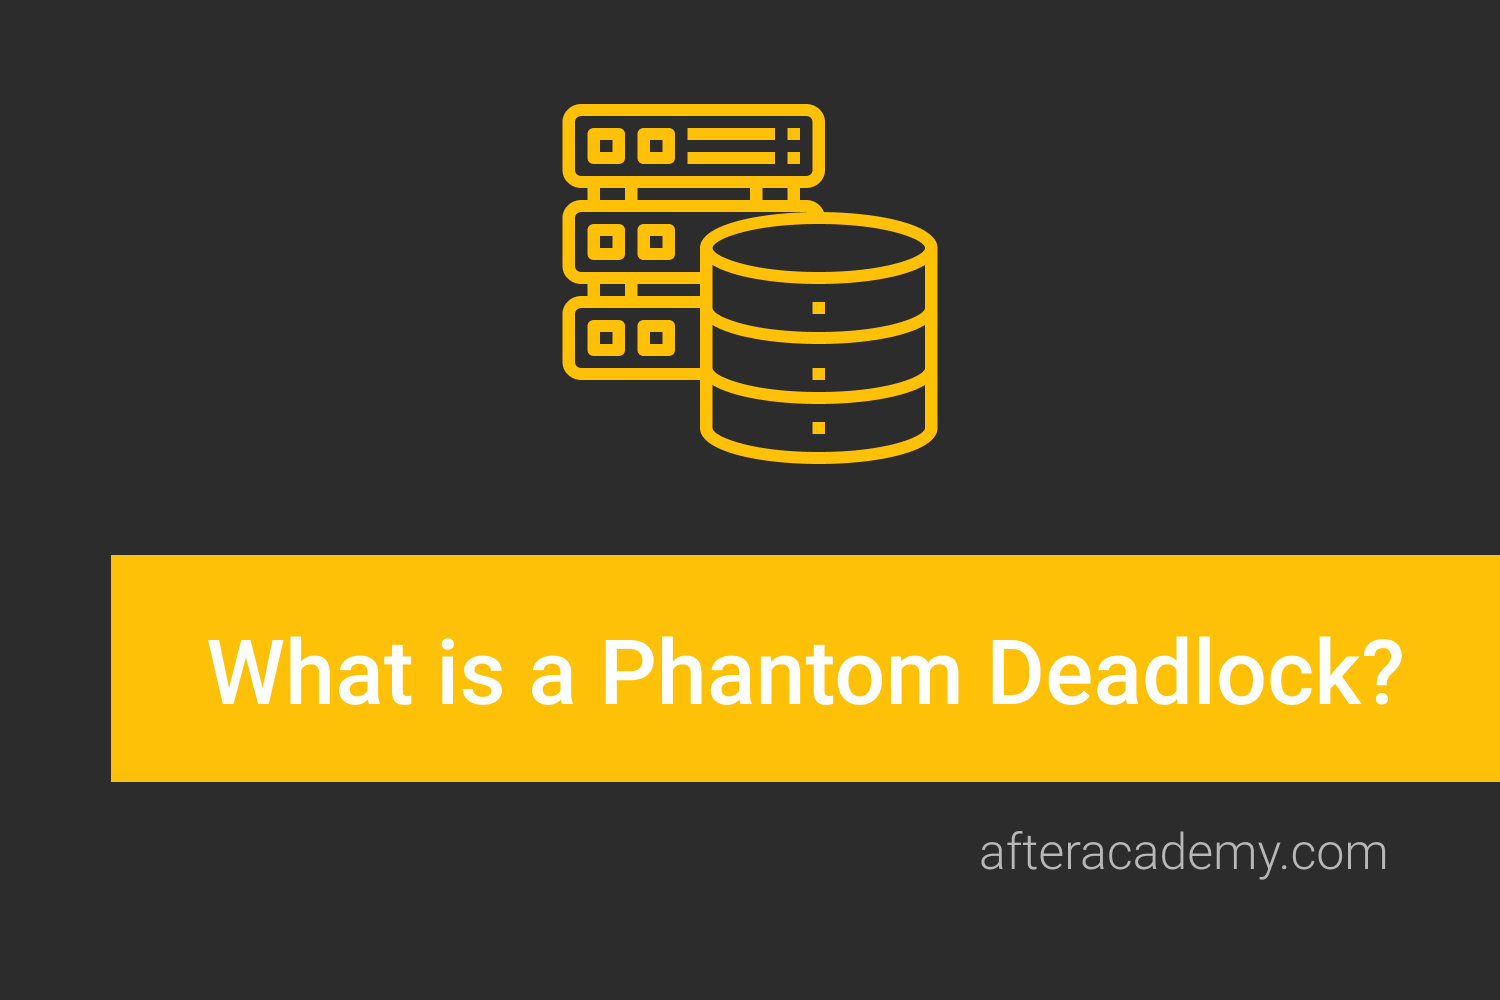 What is a Phantom deadlock?